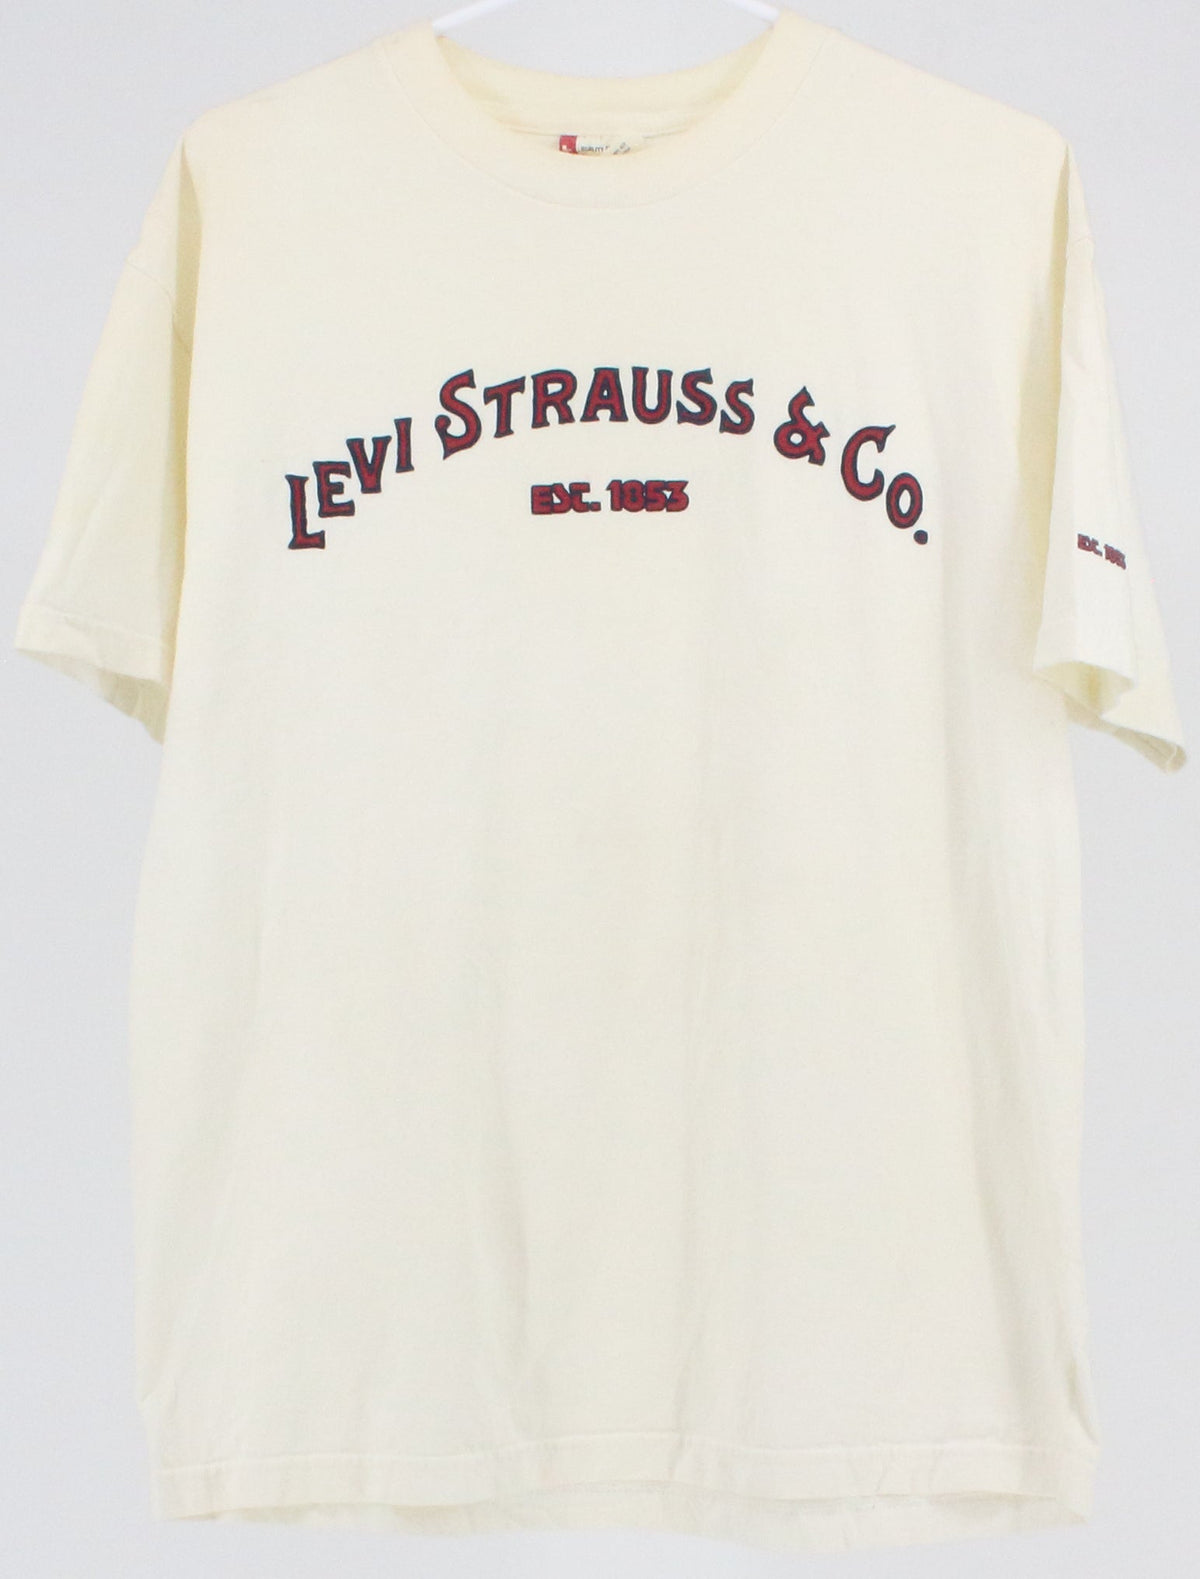 Levi Strauss & Co. Off White T-Shirt